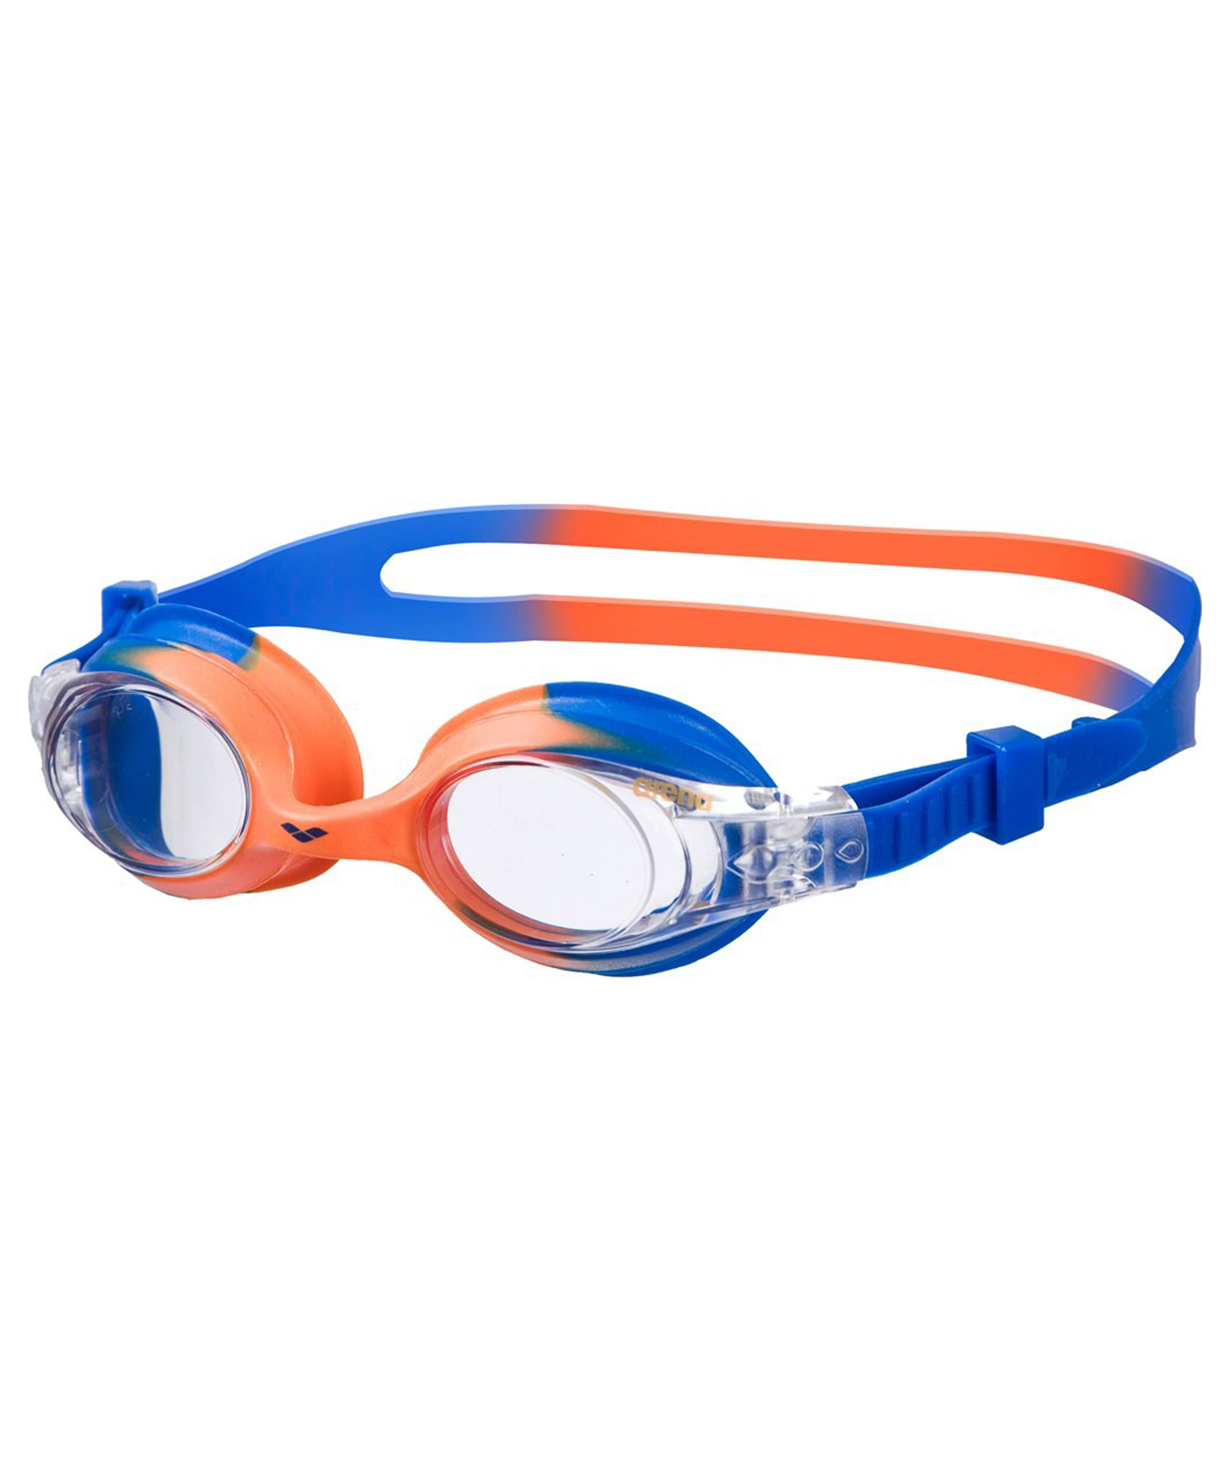 Купить очки 10. Очки Arena x-Lite Kids. Очки Арена для плавания детские. Очки для плавания Arena. Arena очки для плавания Kids.